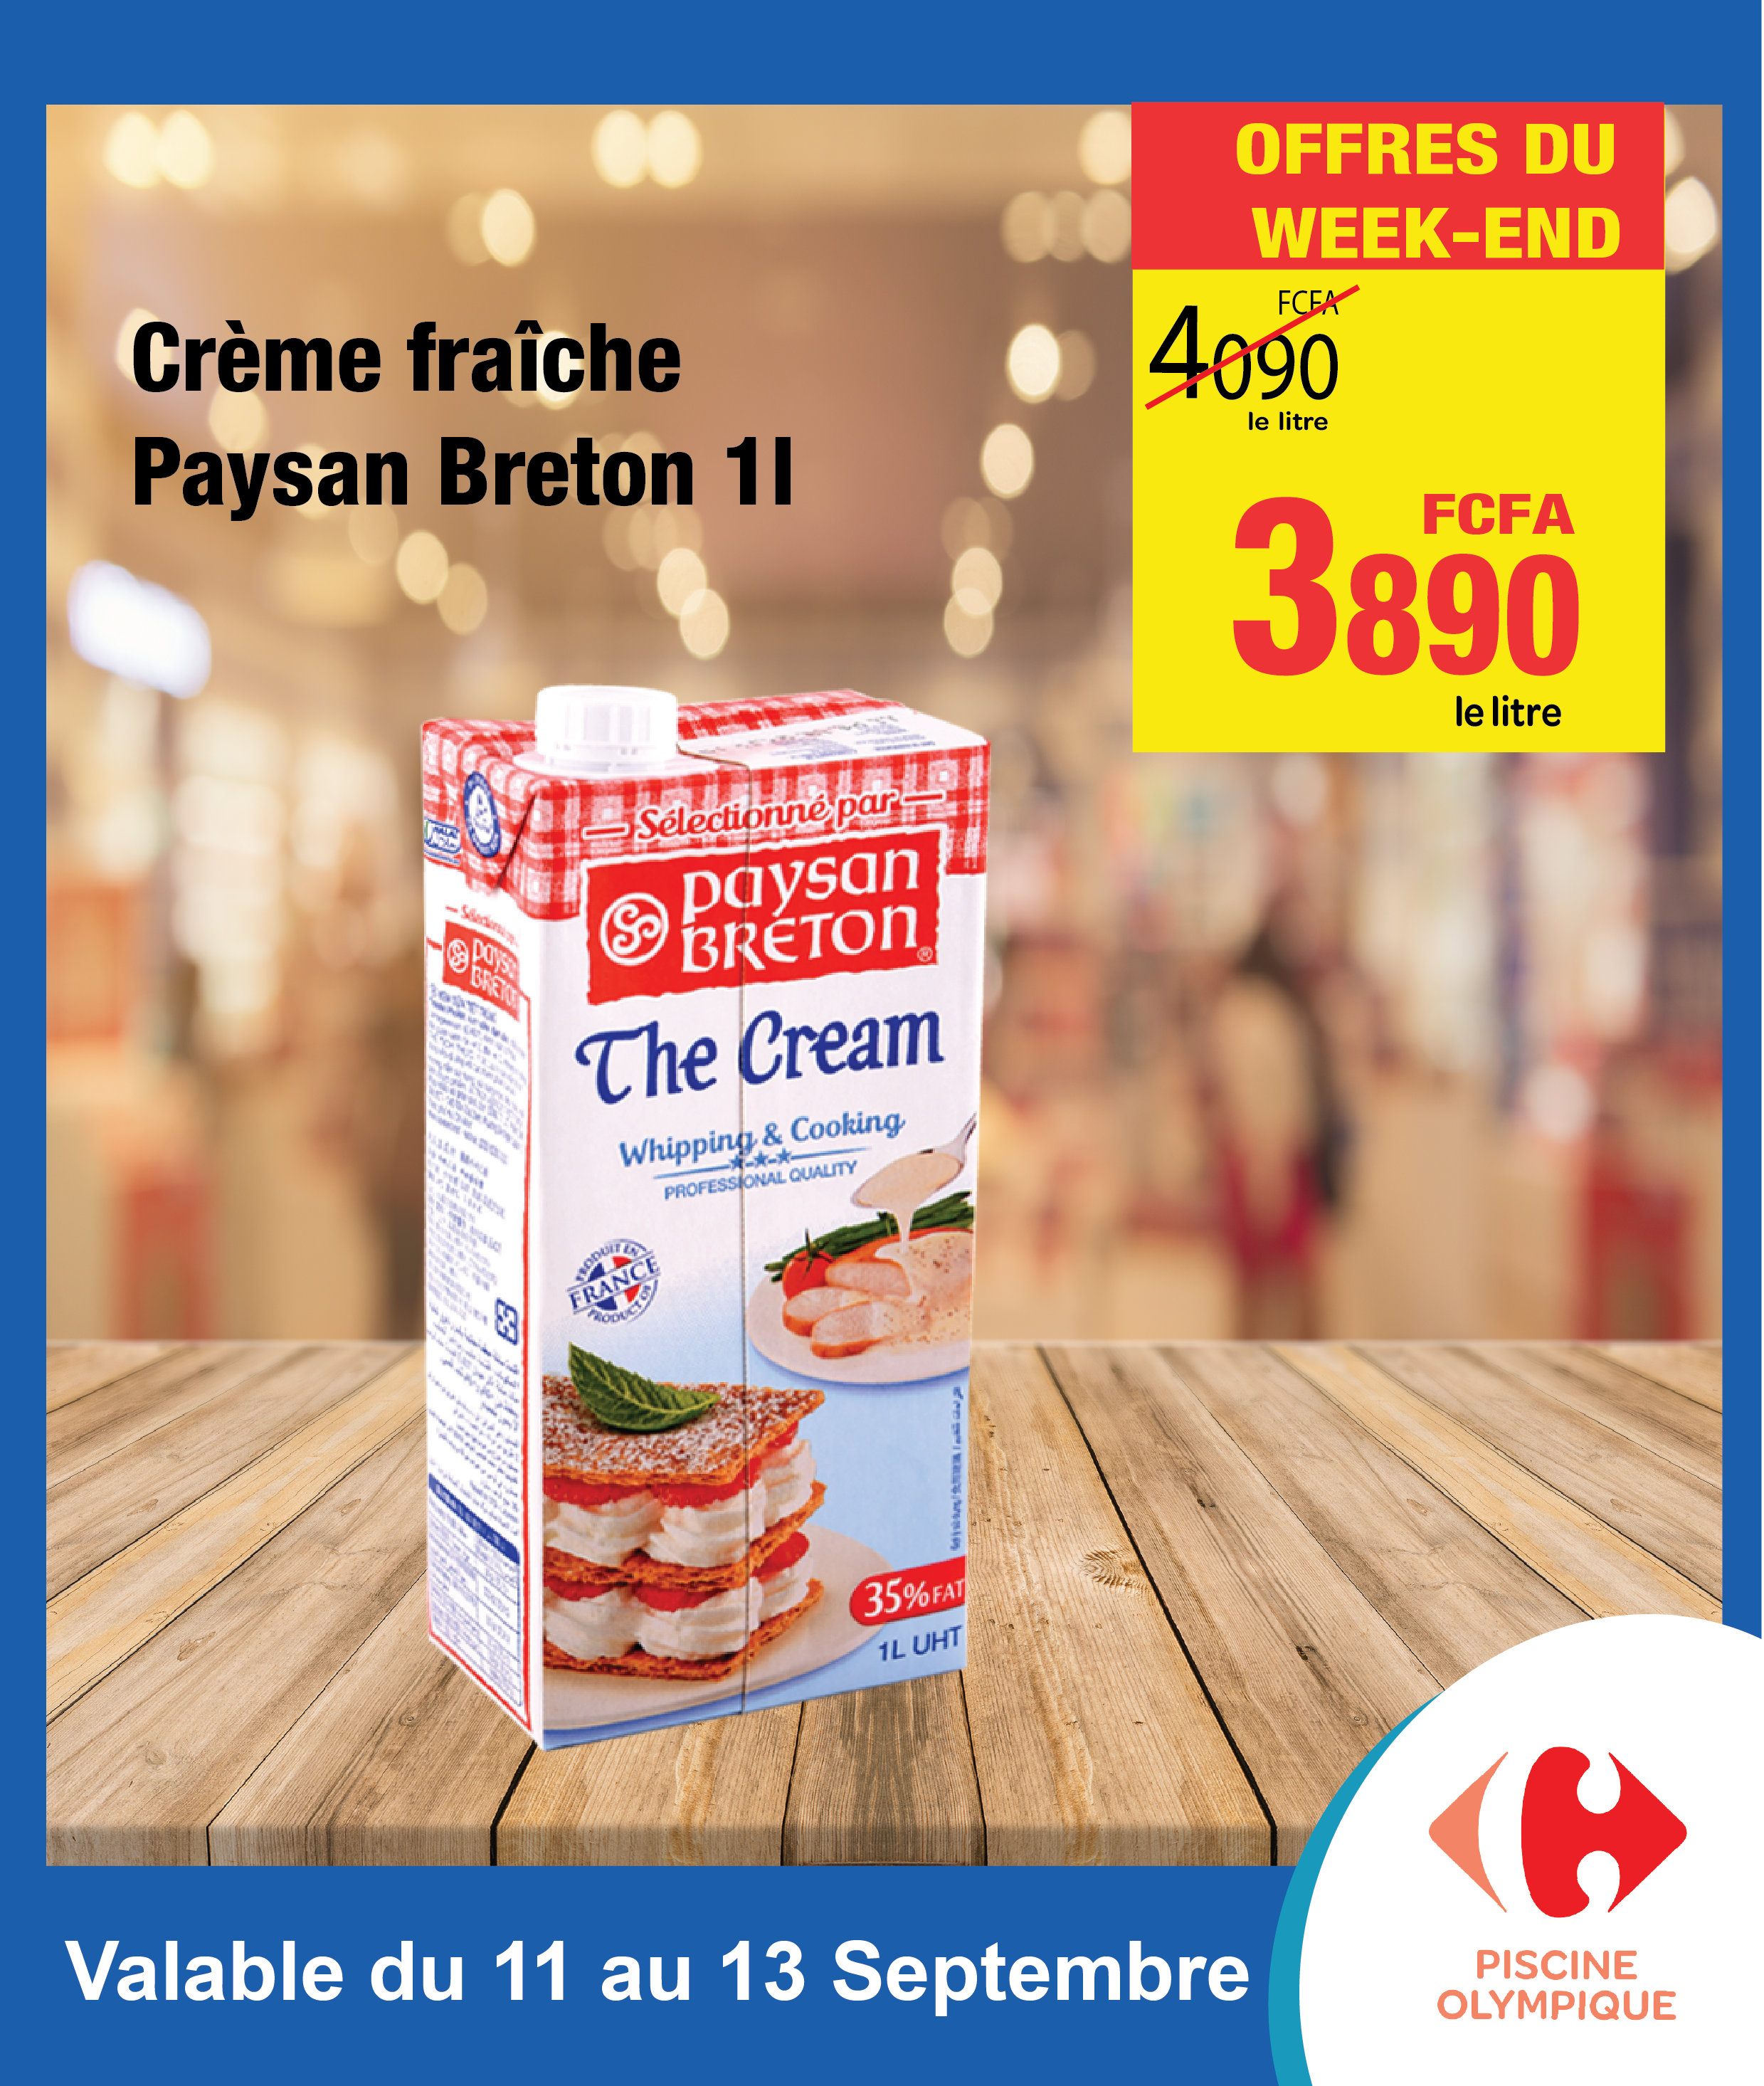 Crème fraîche Paysan breton 1 litre